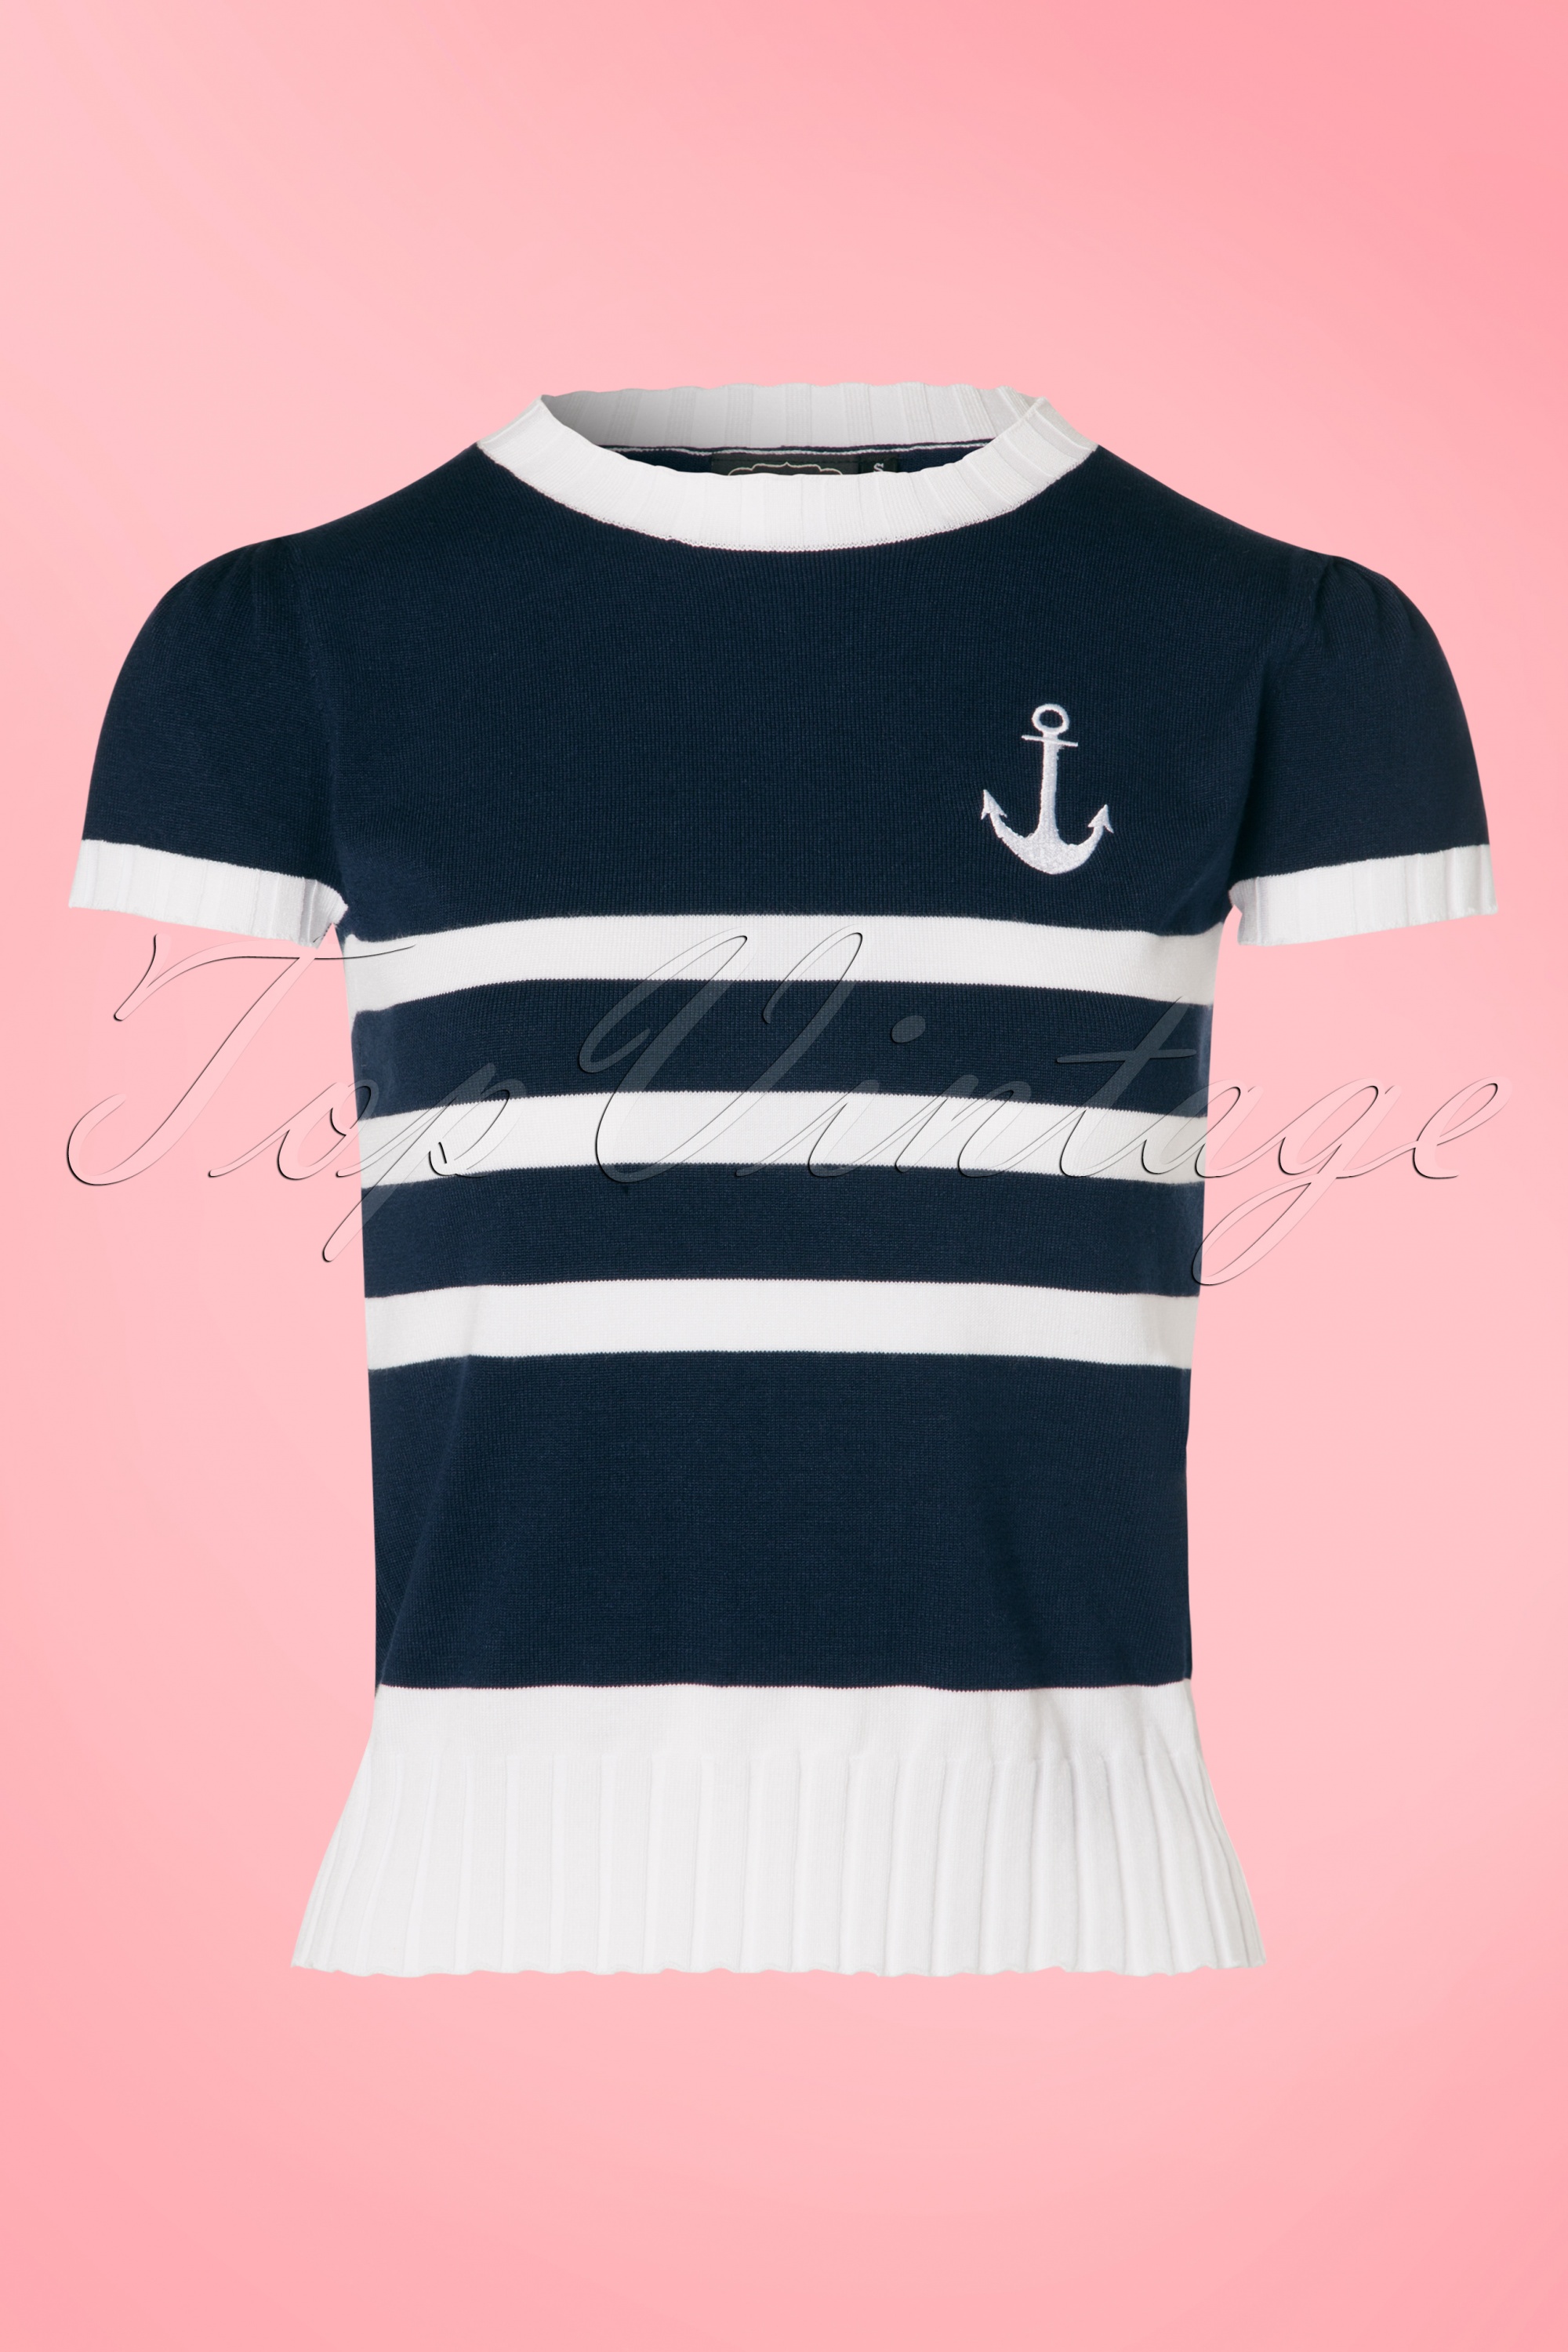 Vixen - Parker Sailor trui in marineblauw en wit